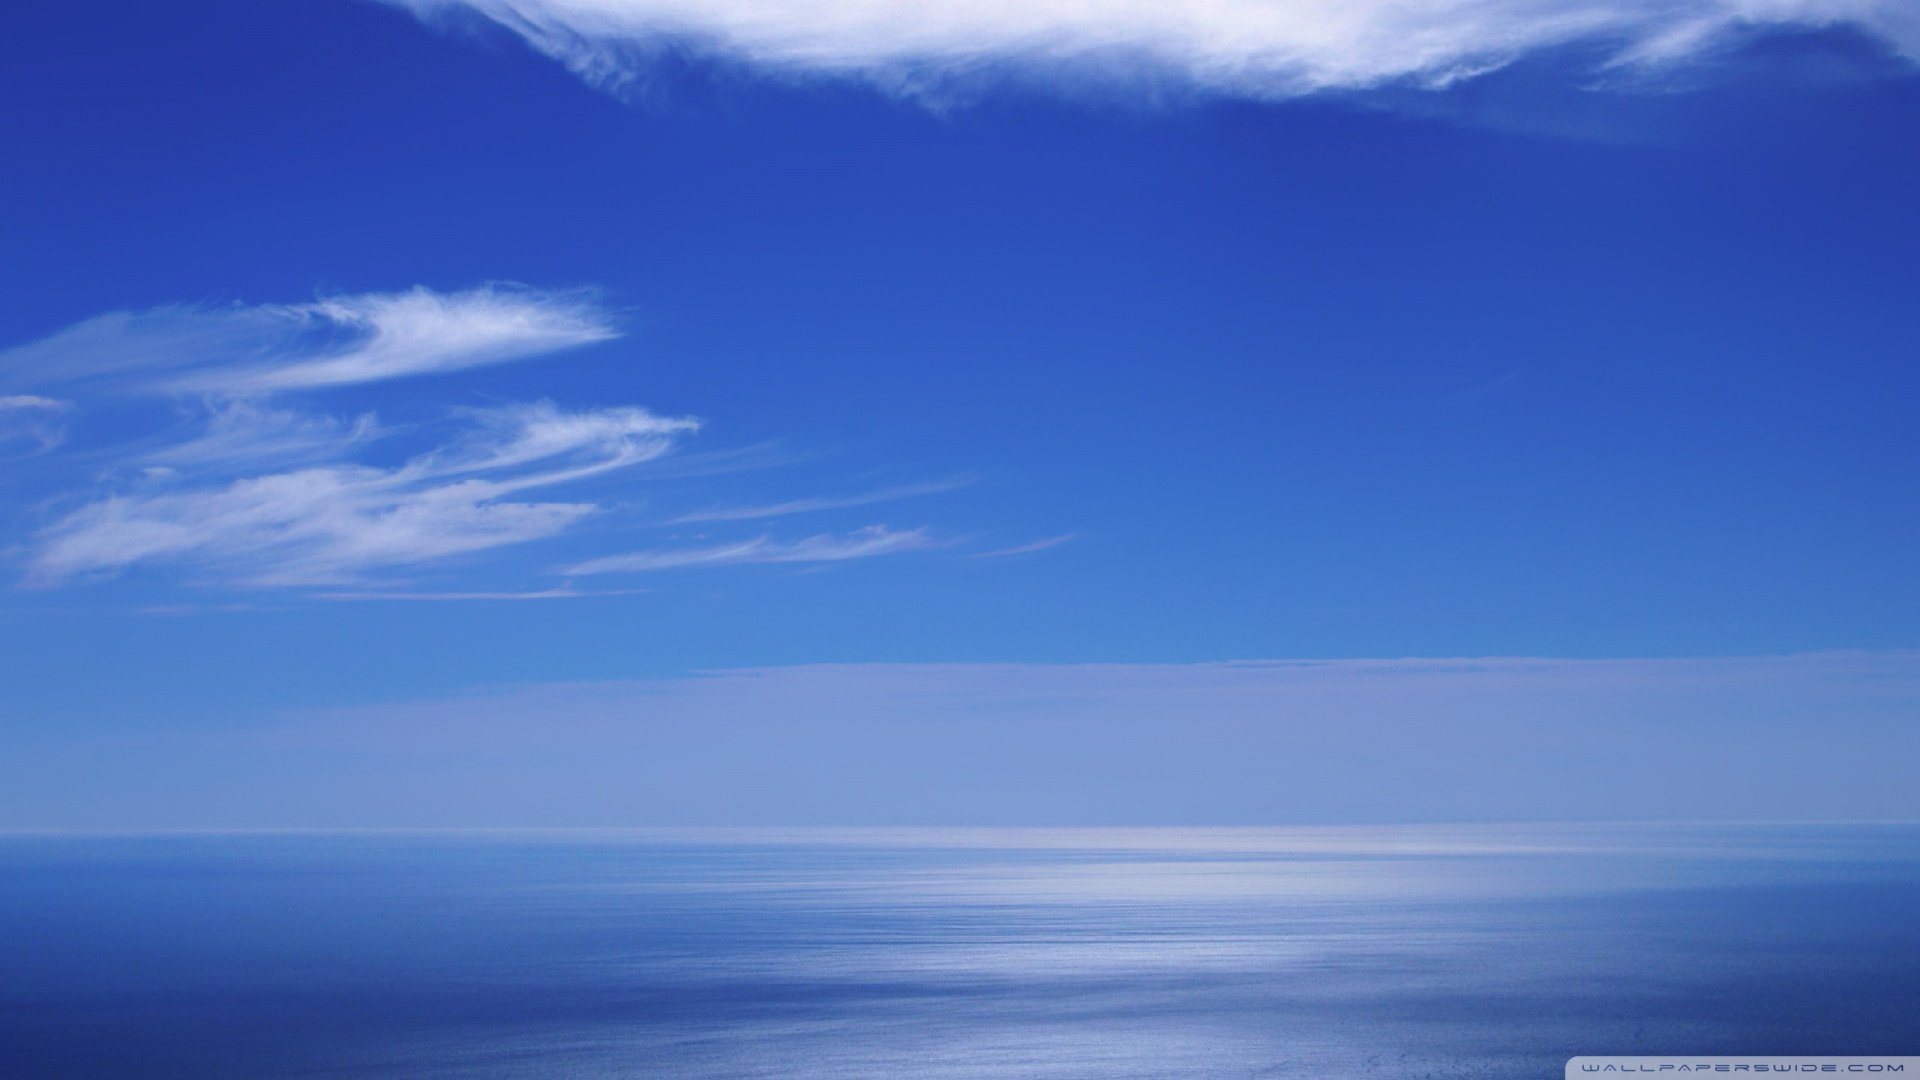 Calm Ocean And Blue Sky Wallpaper 1920x1080 Calm Ocean And Blue